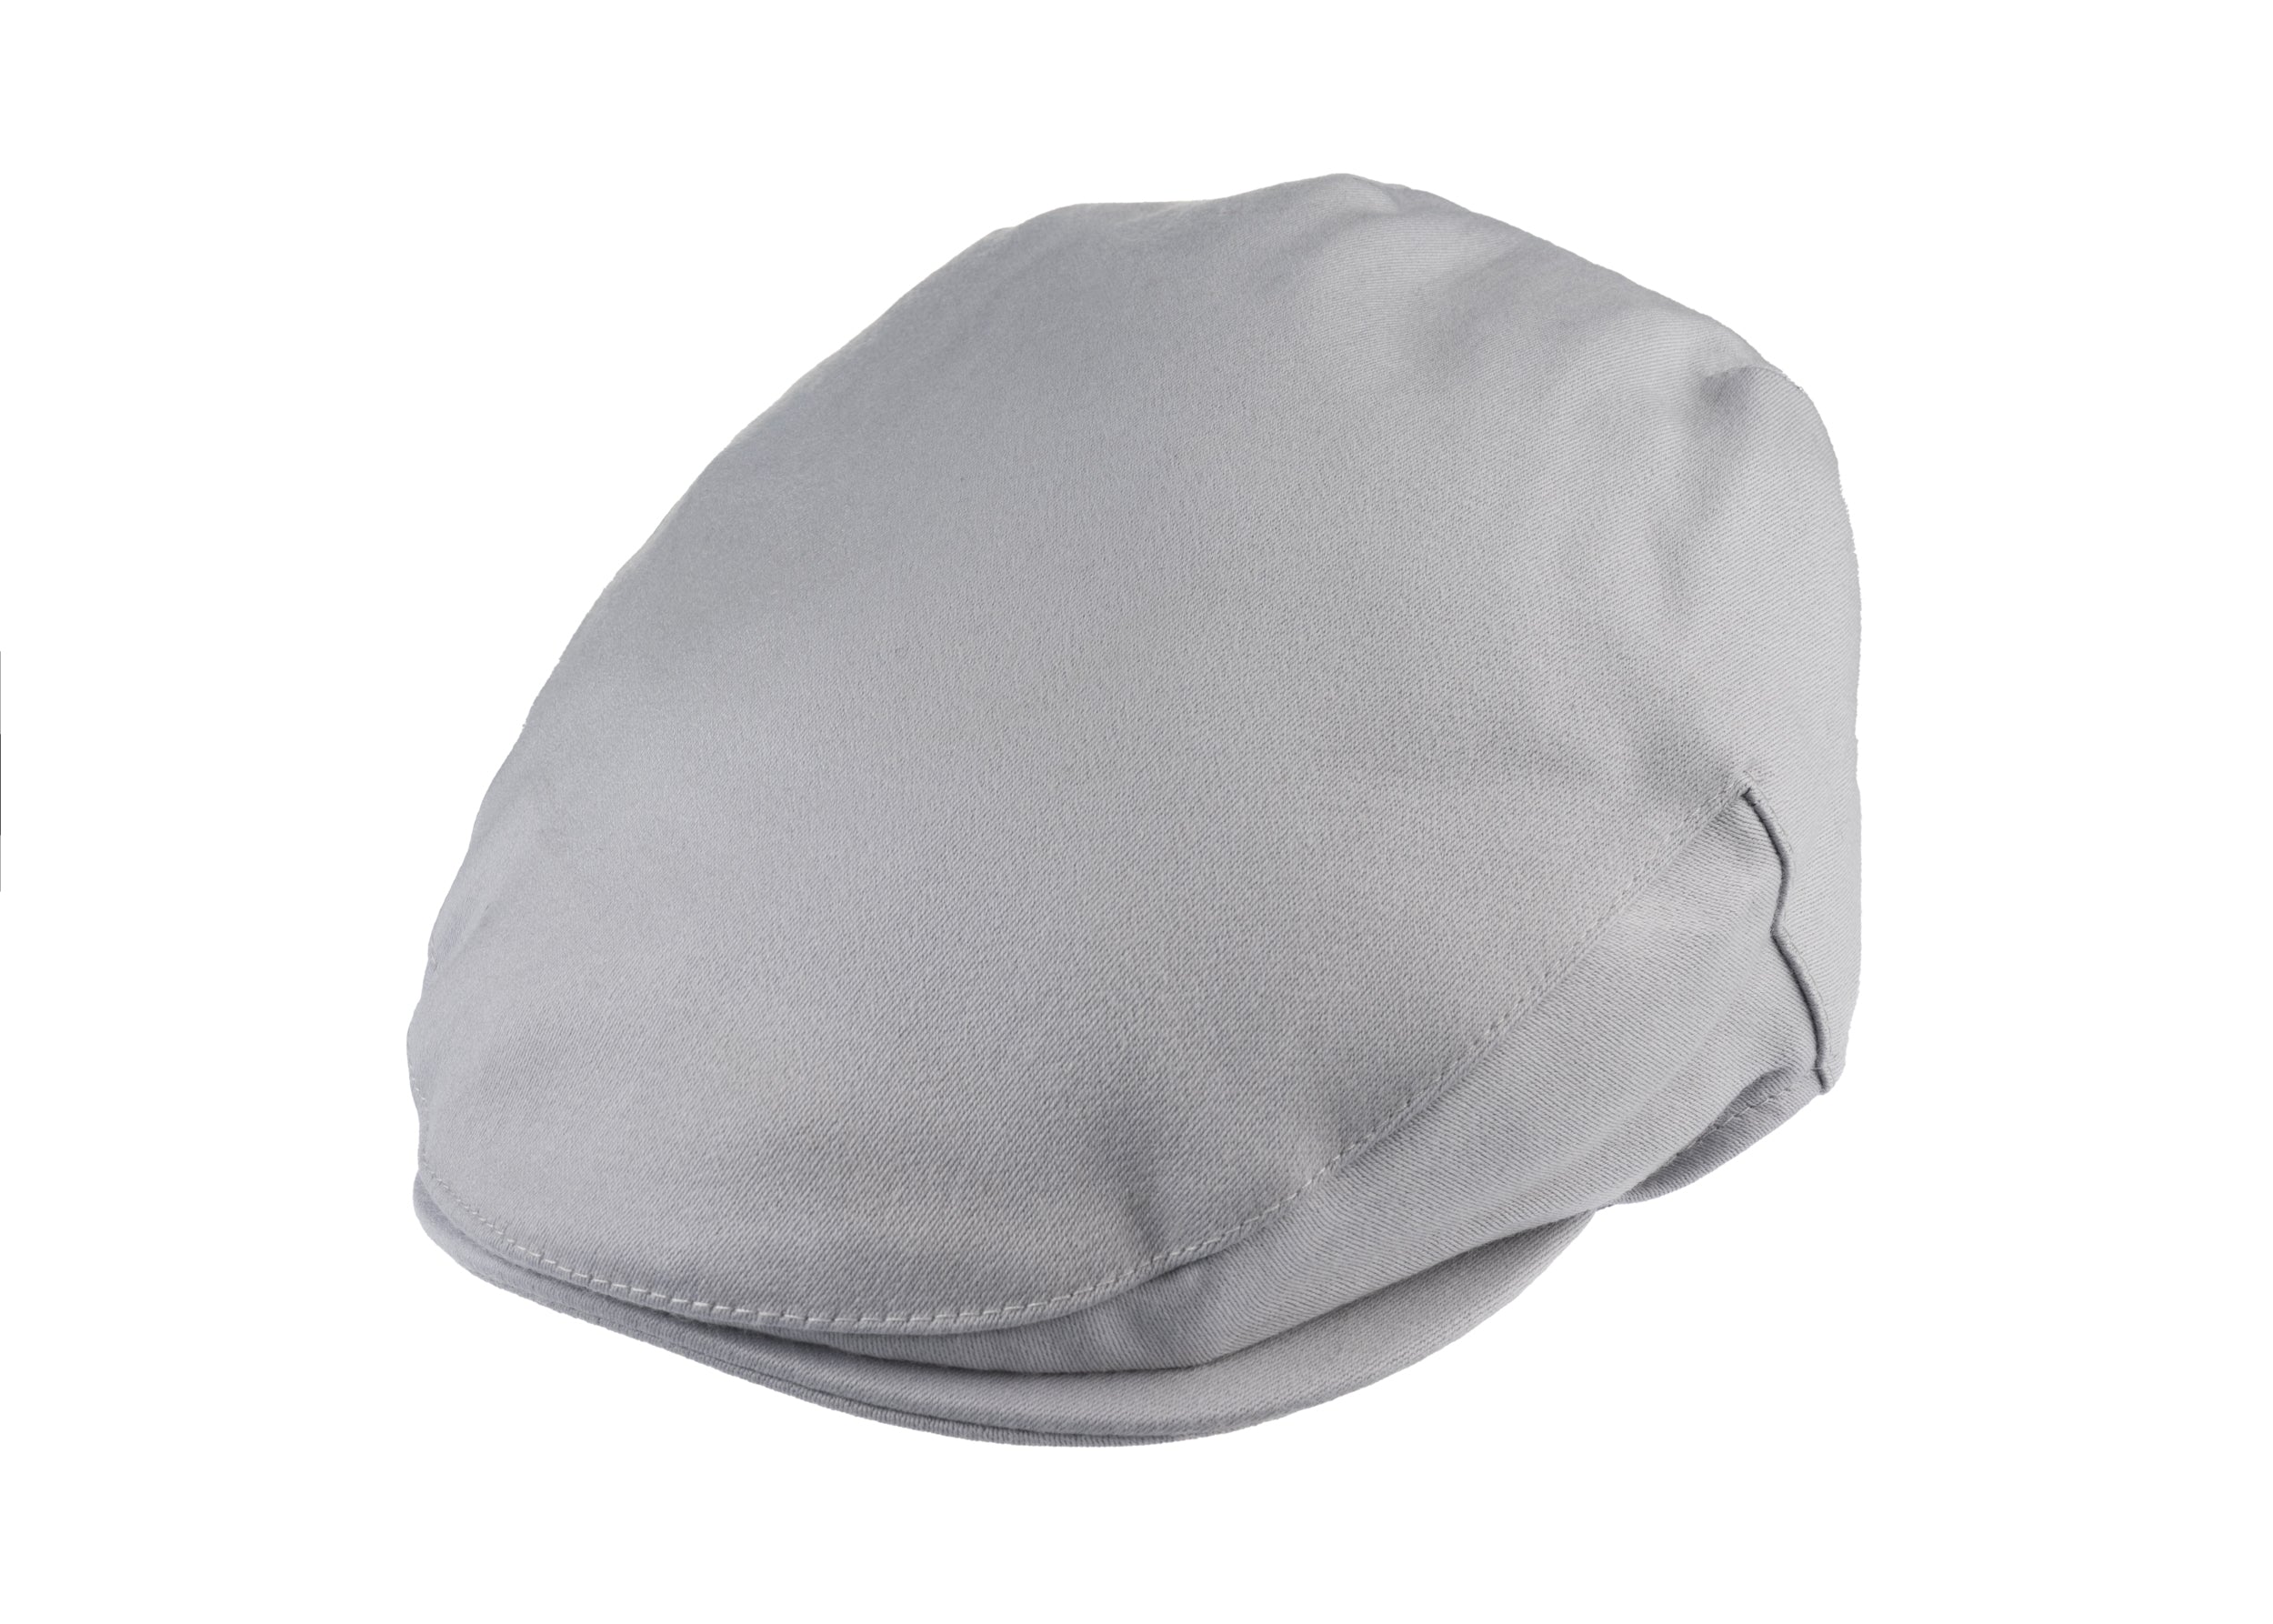 Ellis Balmoral flat cap in satin wool fabric in Mist